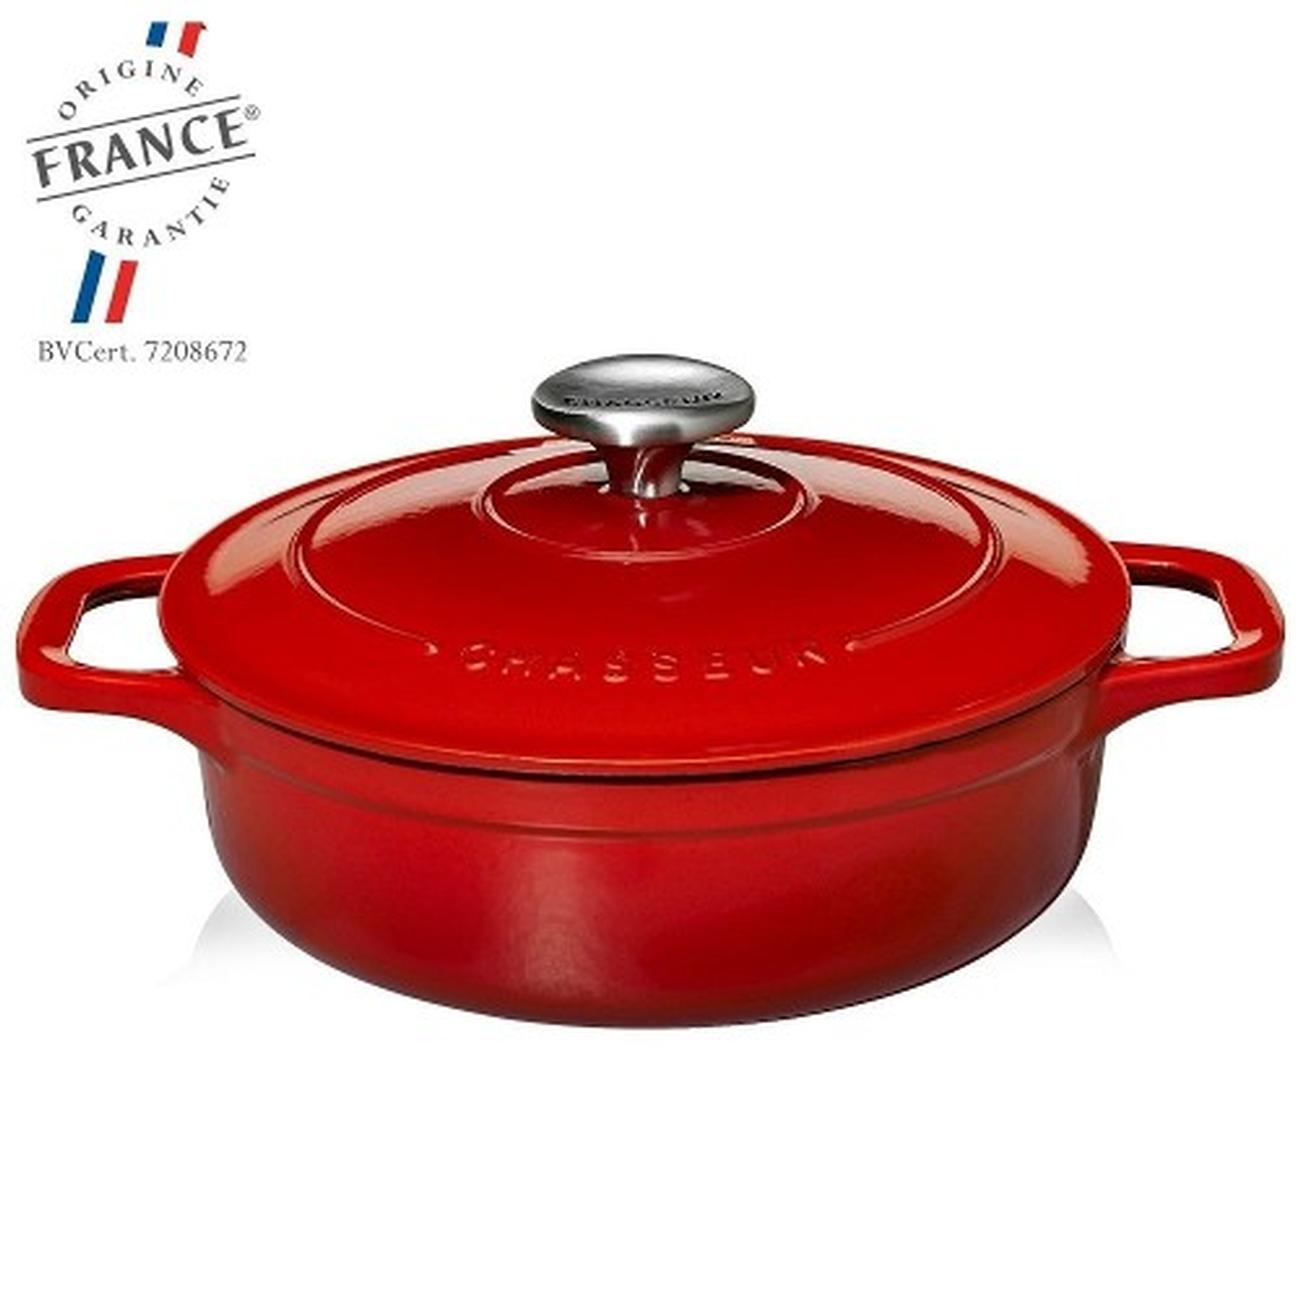 chasseur-shallow-round-casserole-30cm-redblack-casserole - Chasseur Shallow Round Casserole 30cm-Red & Black